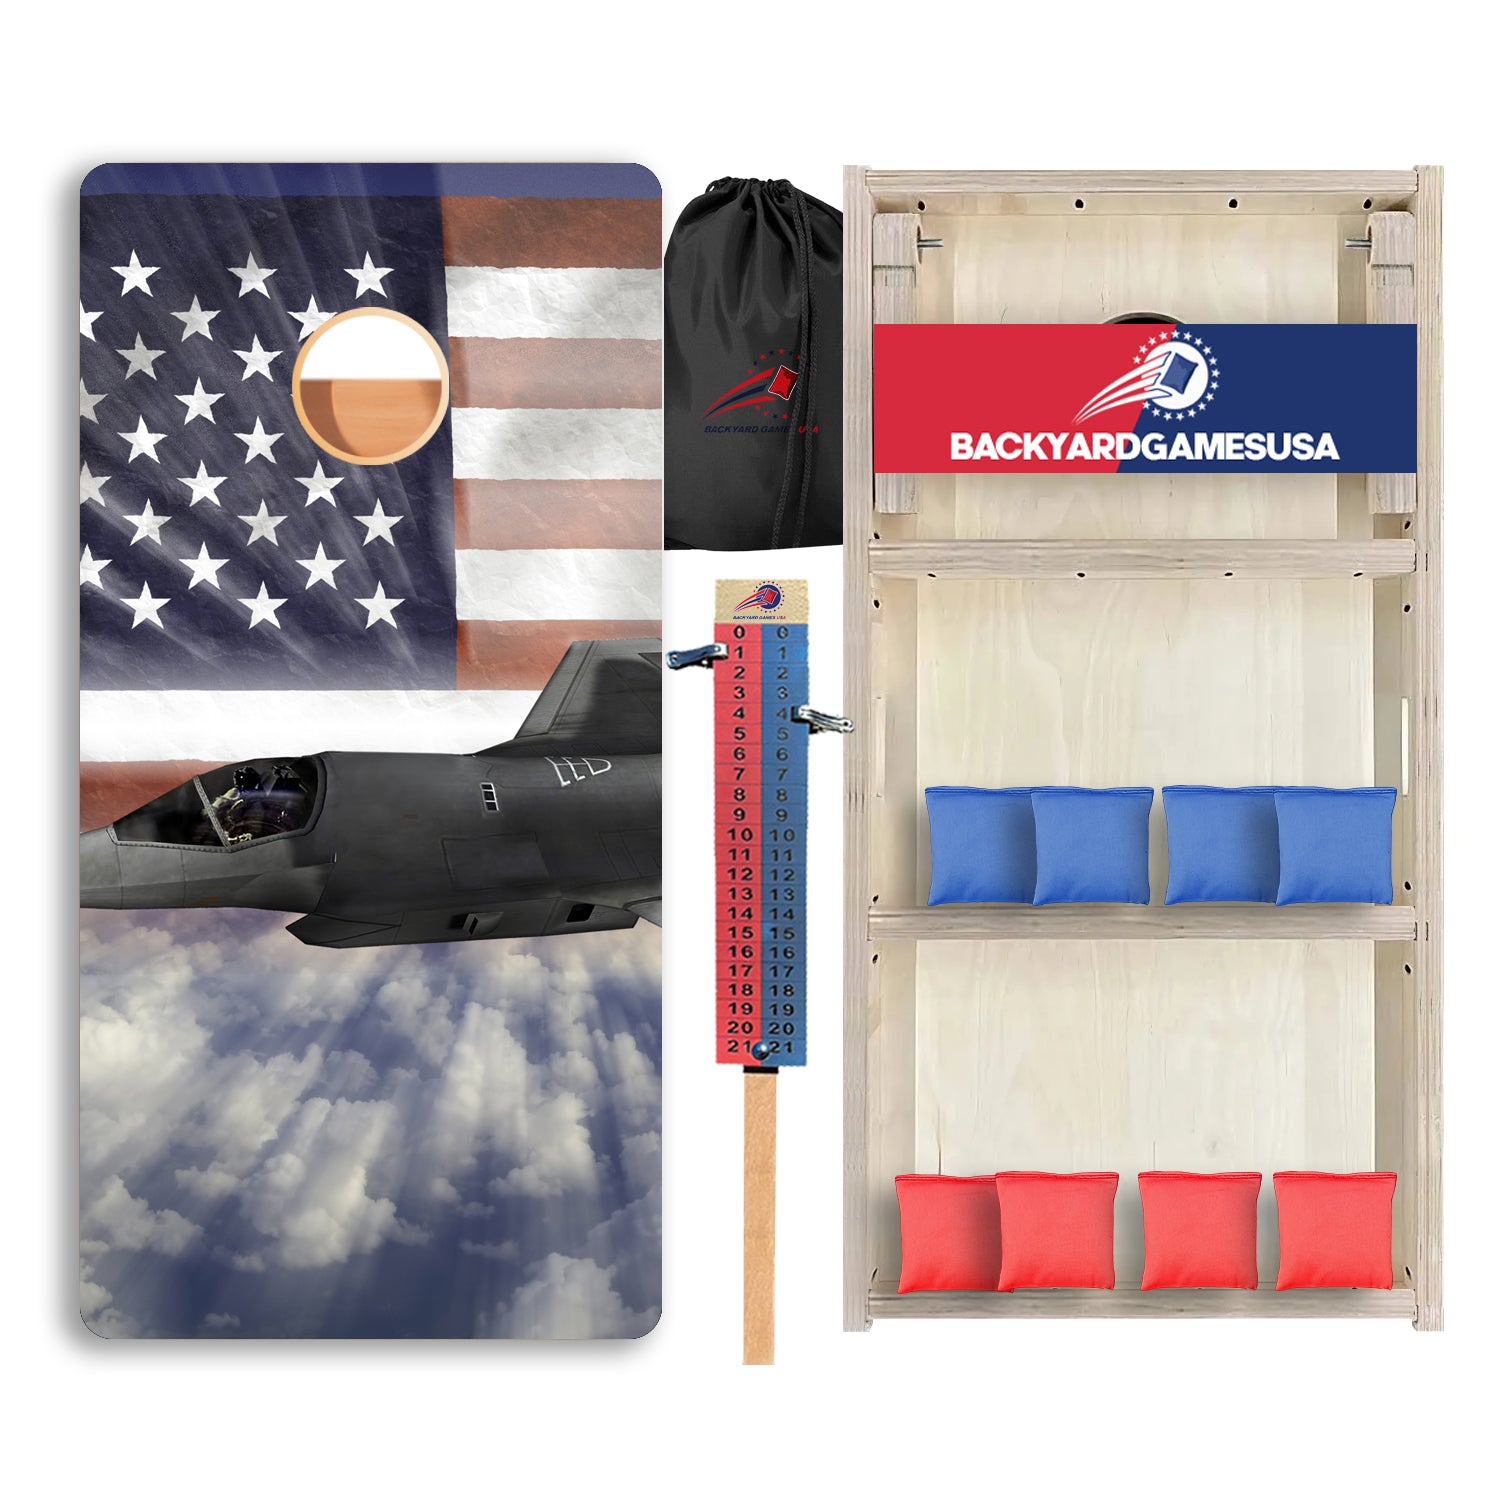 Jet Flag Professional Cornhole Boards